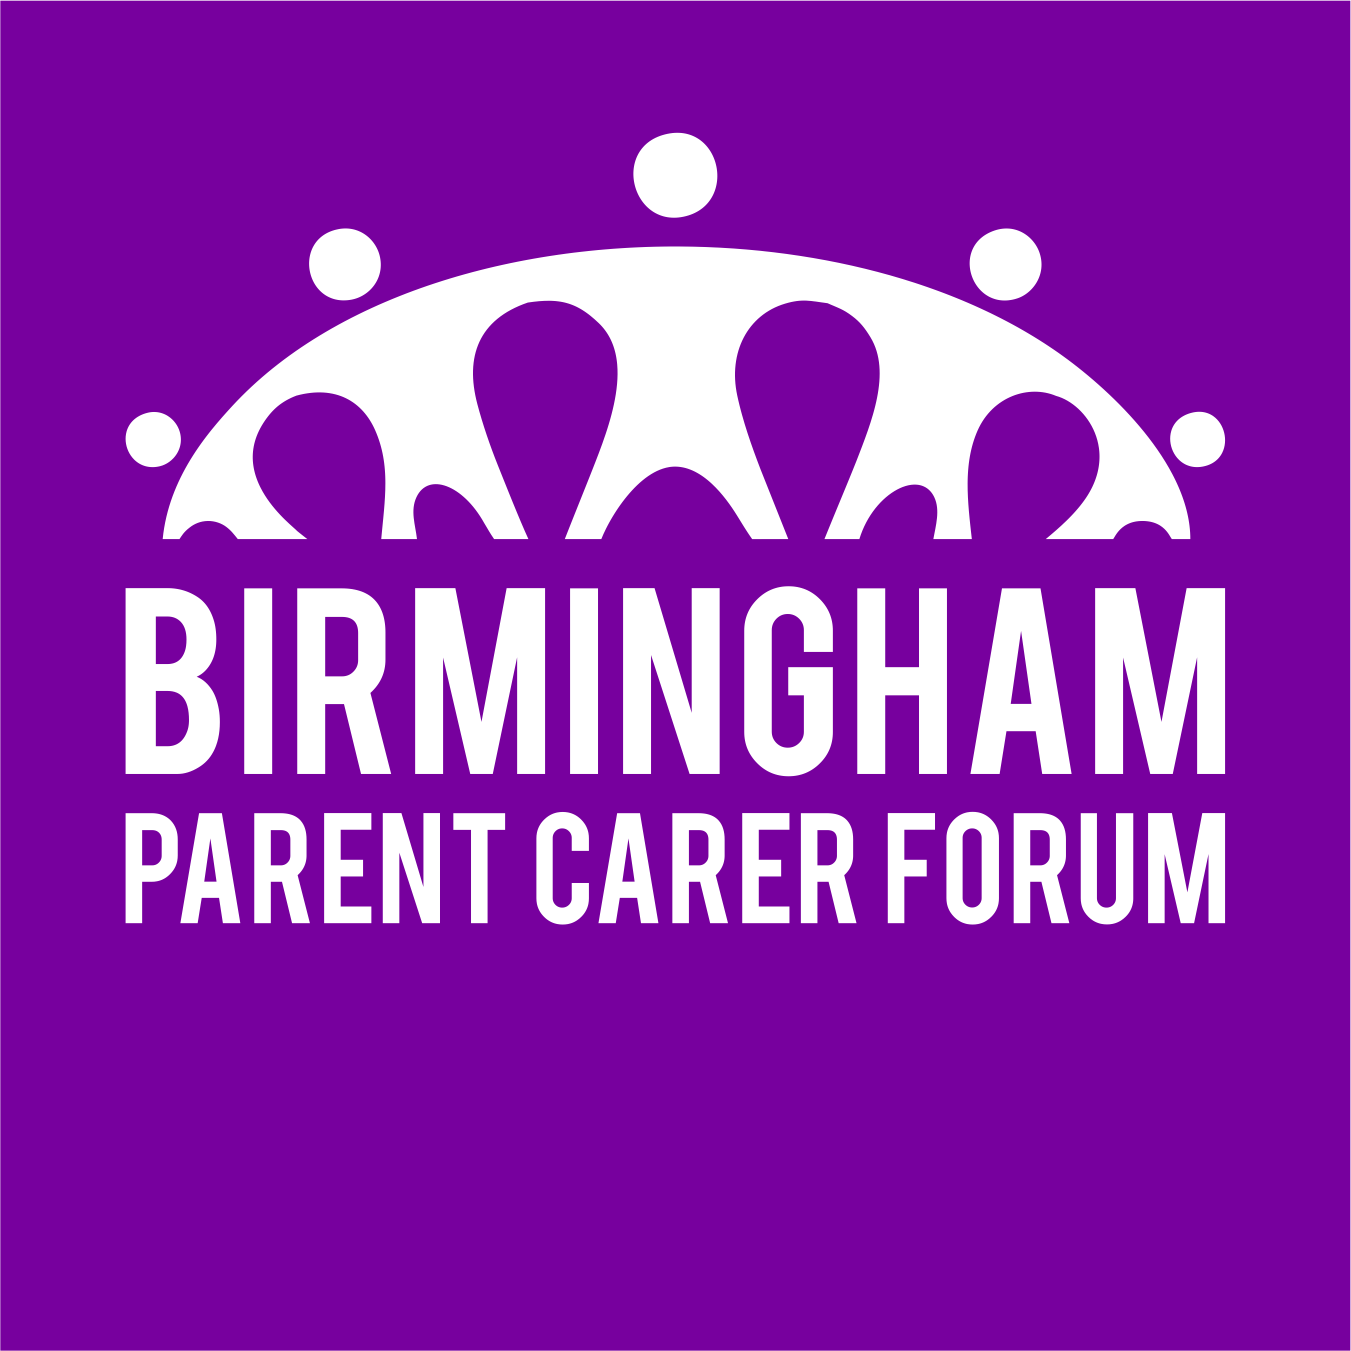 Birmingham Parent Carer Forum - Building a Bridge Between Parent Carers and Their Service Providers